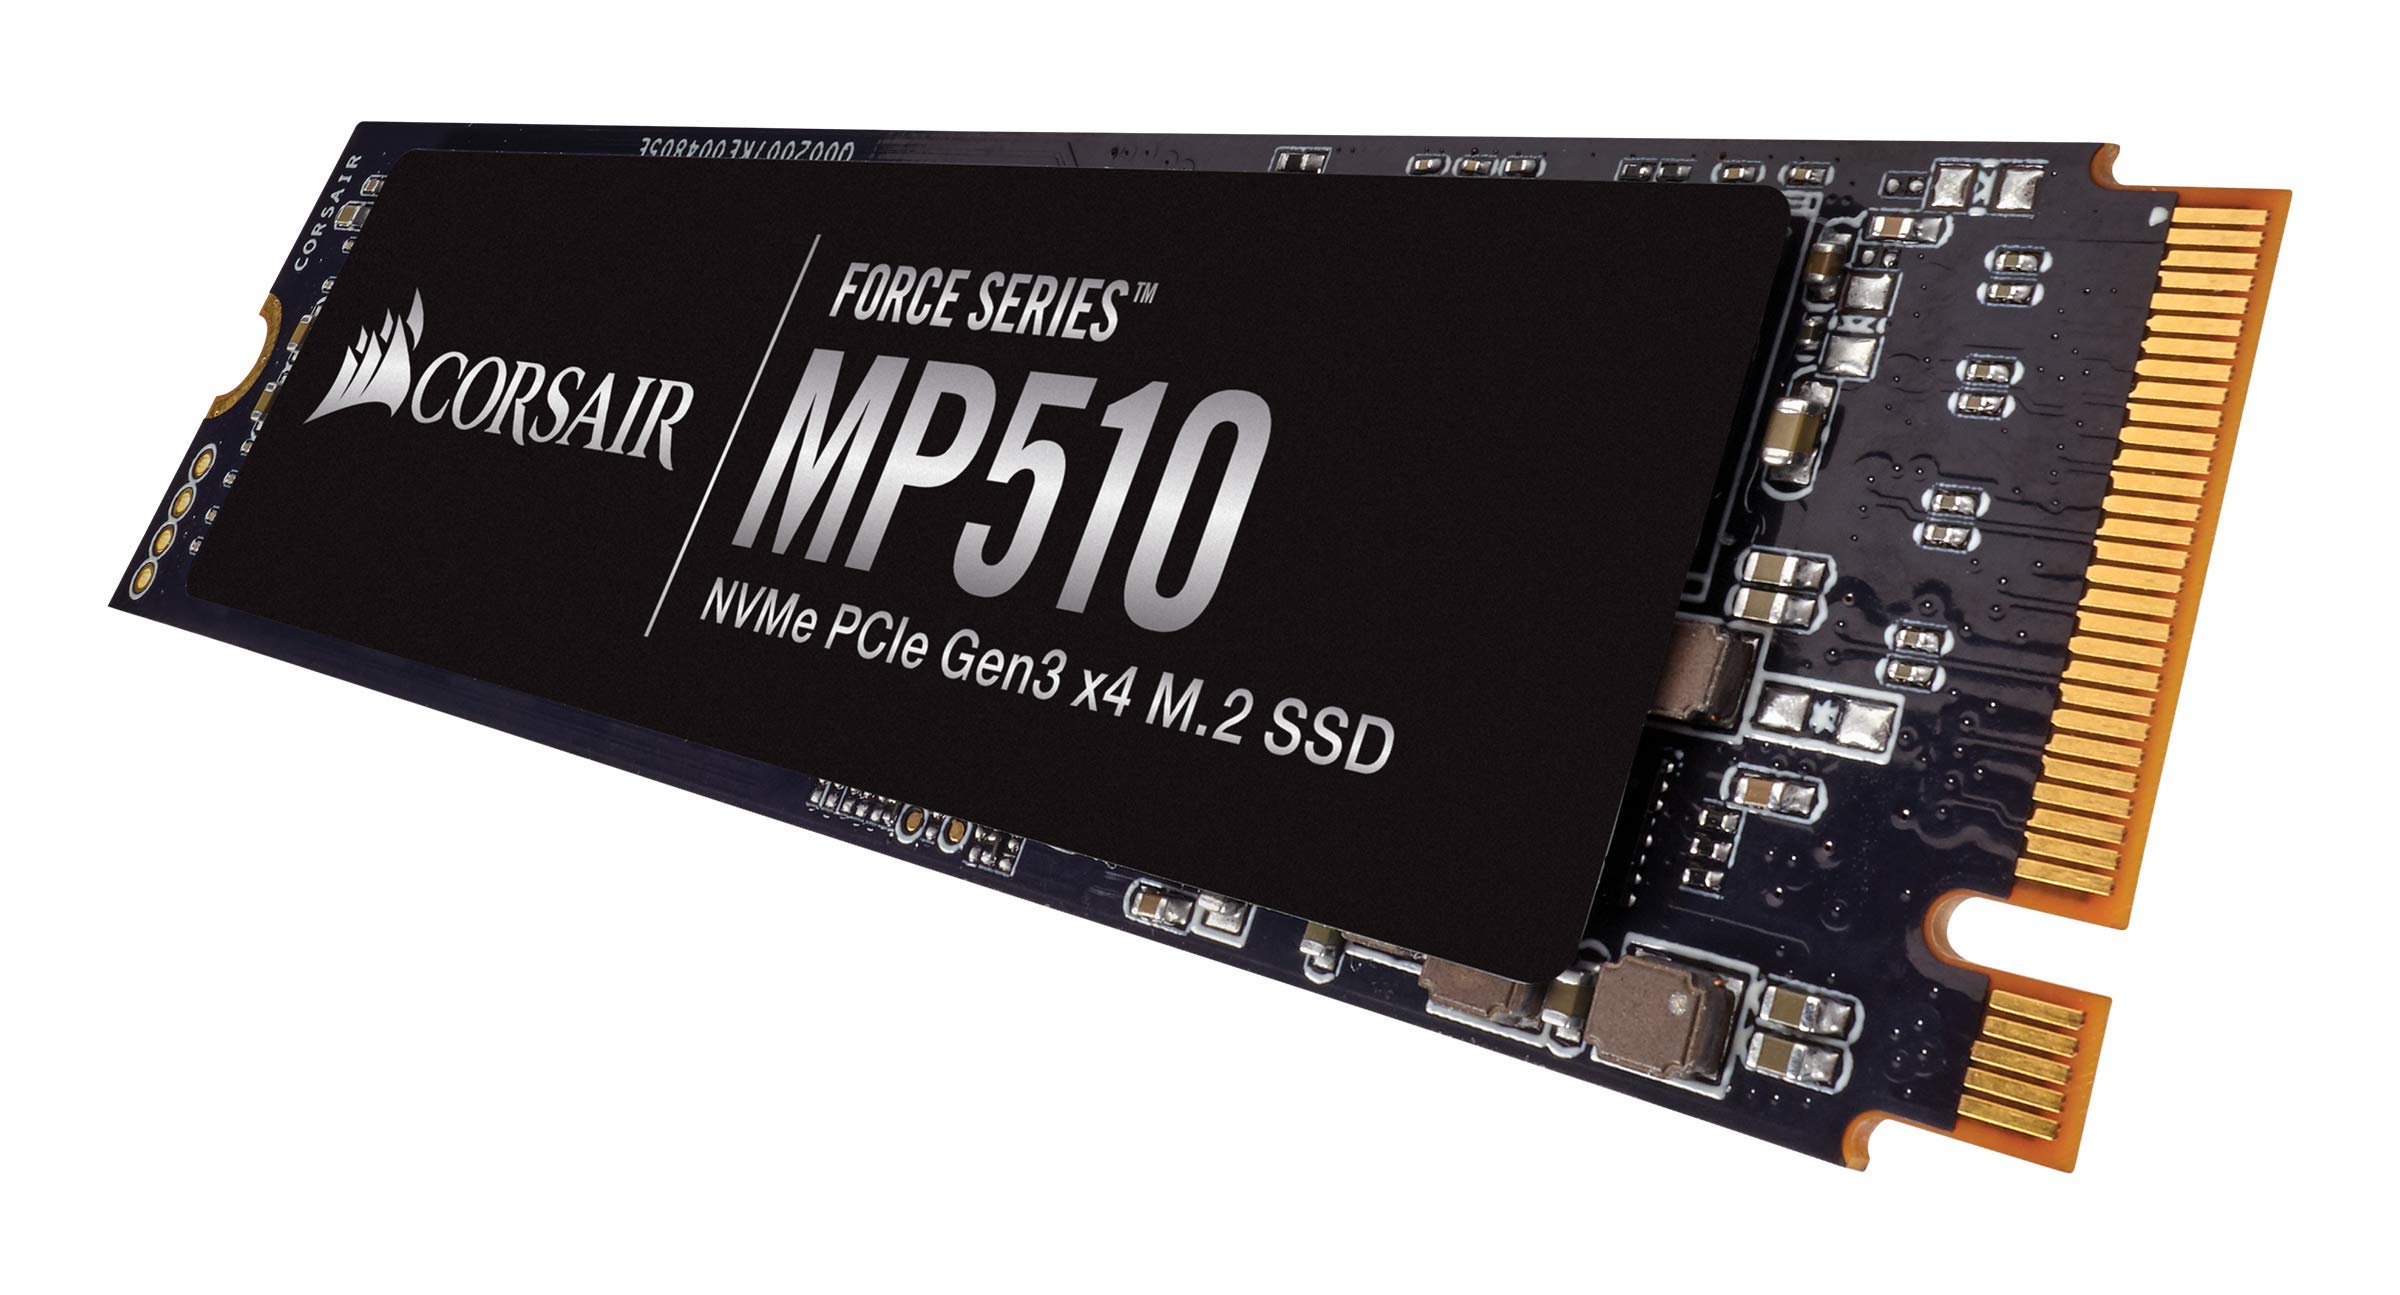 CORSAIR Force MP510 NVMe PCIe Gen3 x4 M.2 960GB SSD